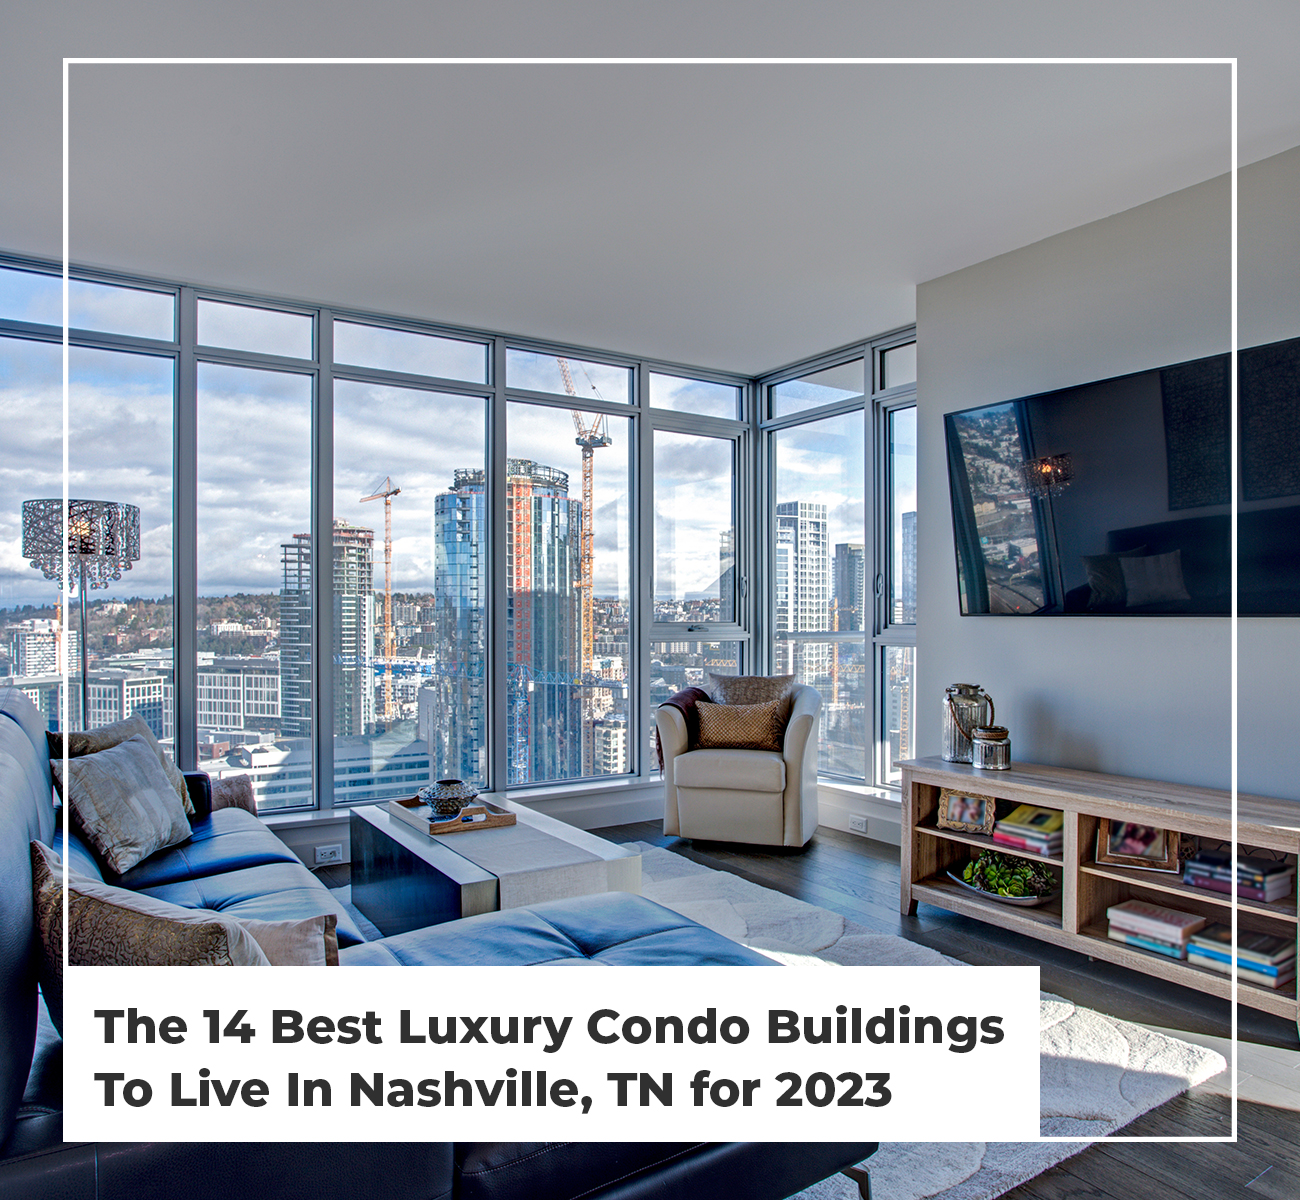 The 14 Best Luxury Condos In Nashville - Main Image